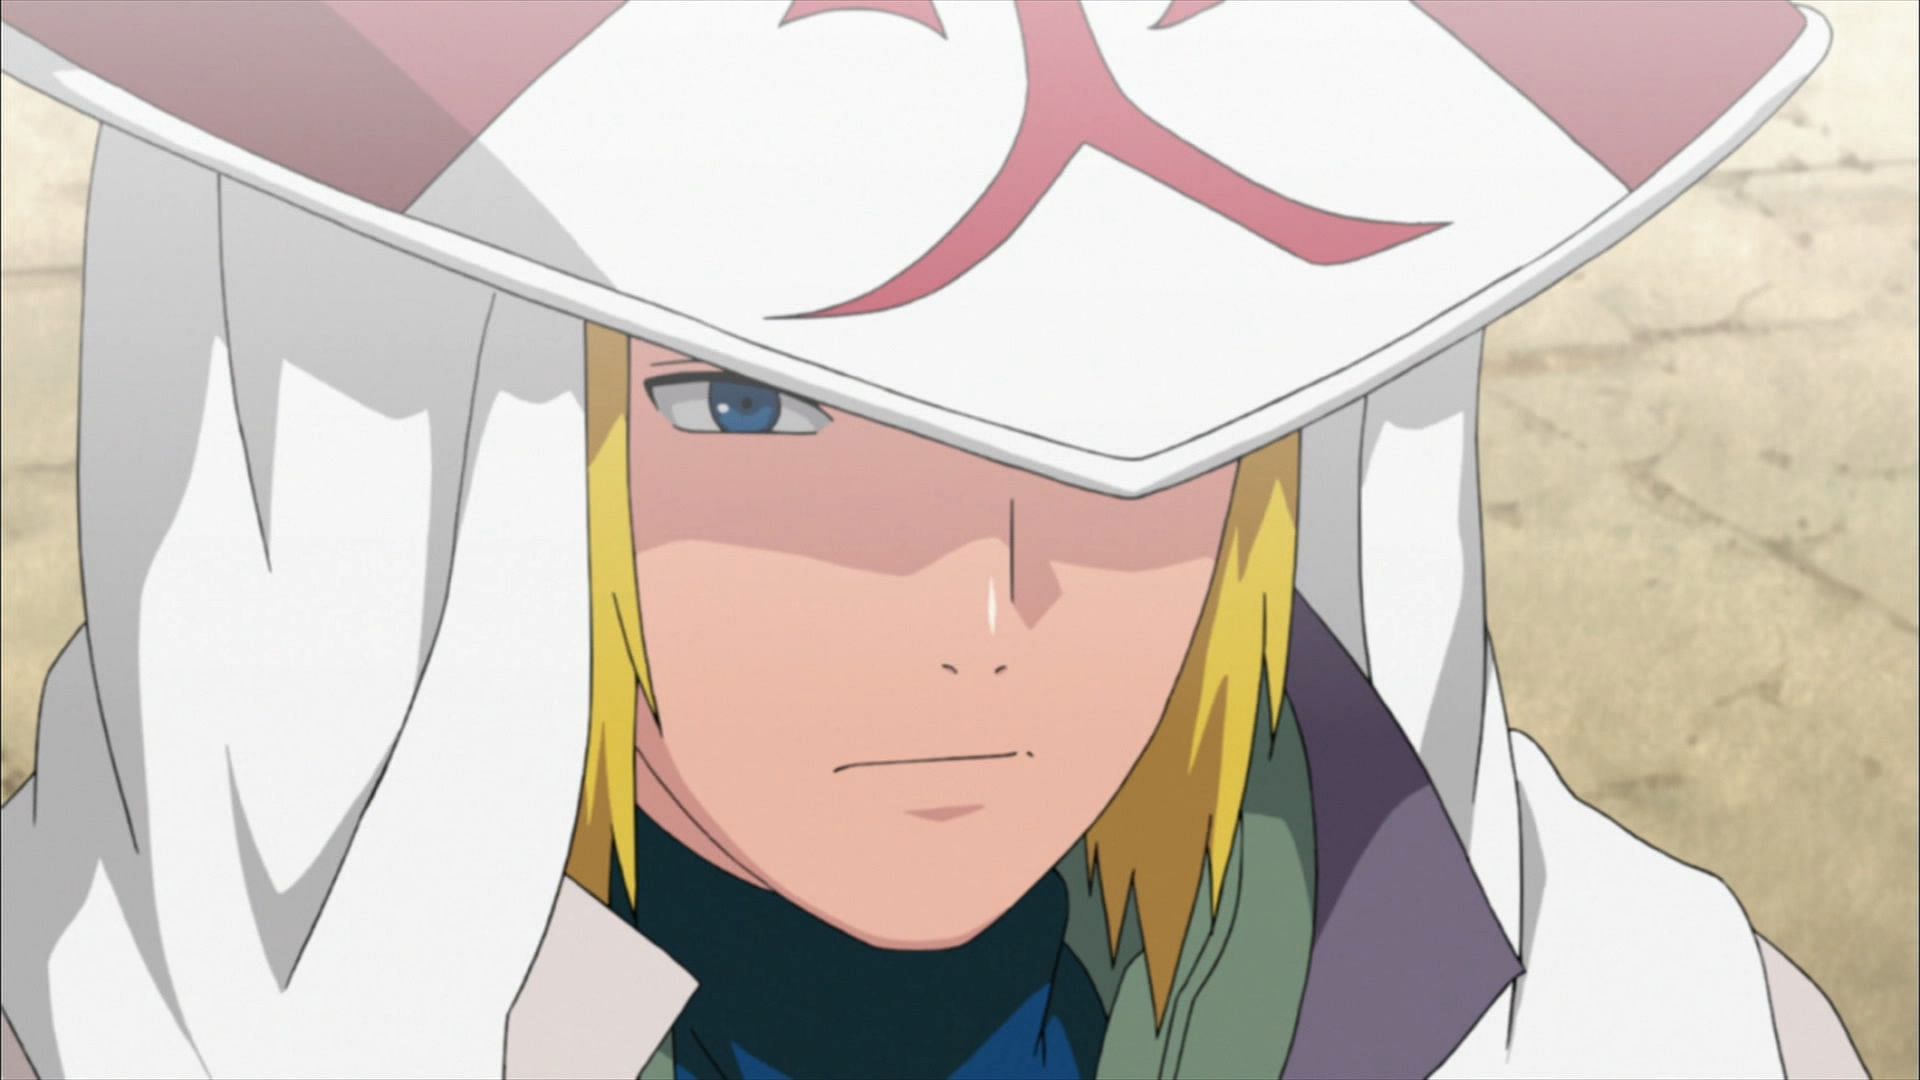 Naruto: Minato accomplished Hashirama's dream before becoming